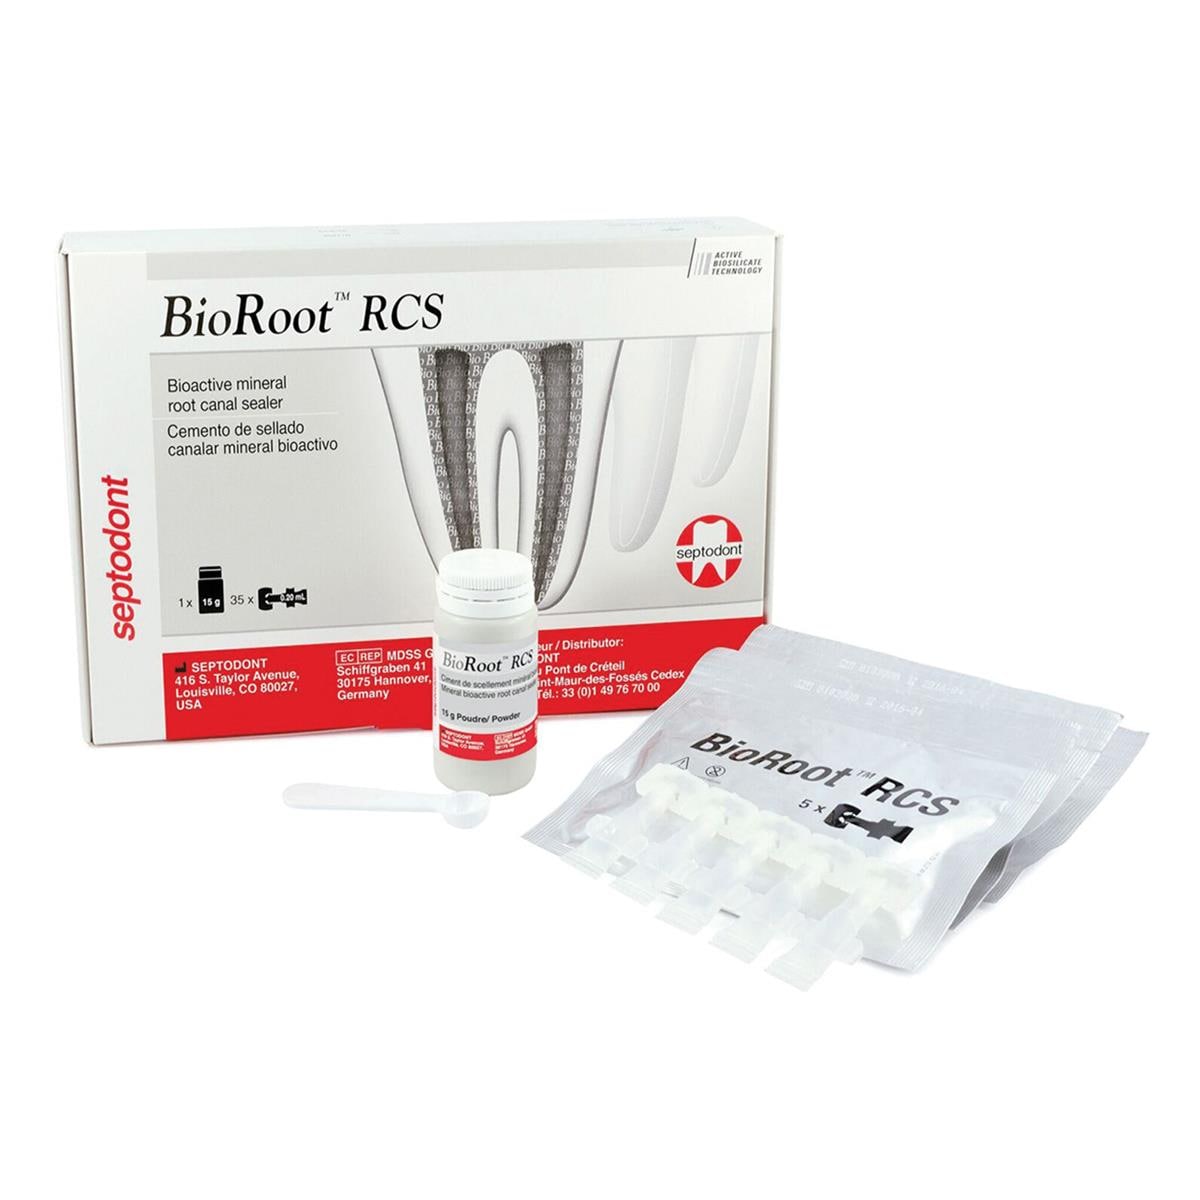 BioRoot RCS Powder 15g & Liquid 0.20ml 35pk